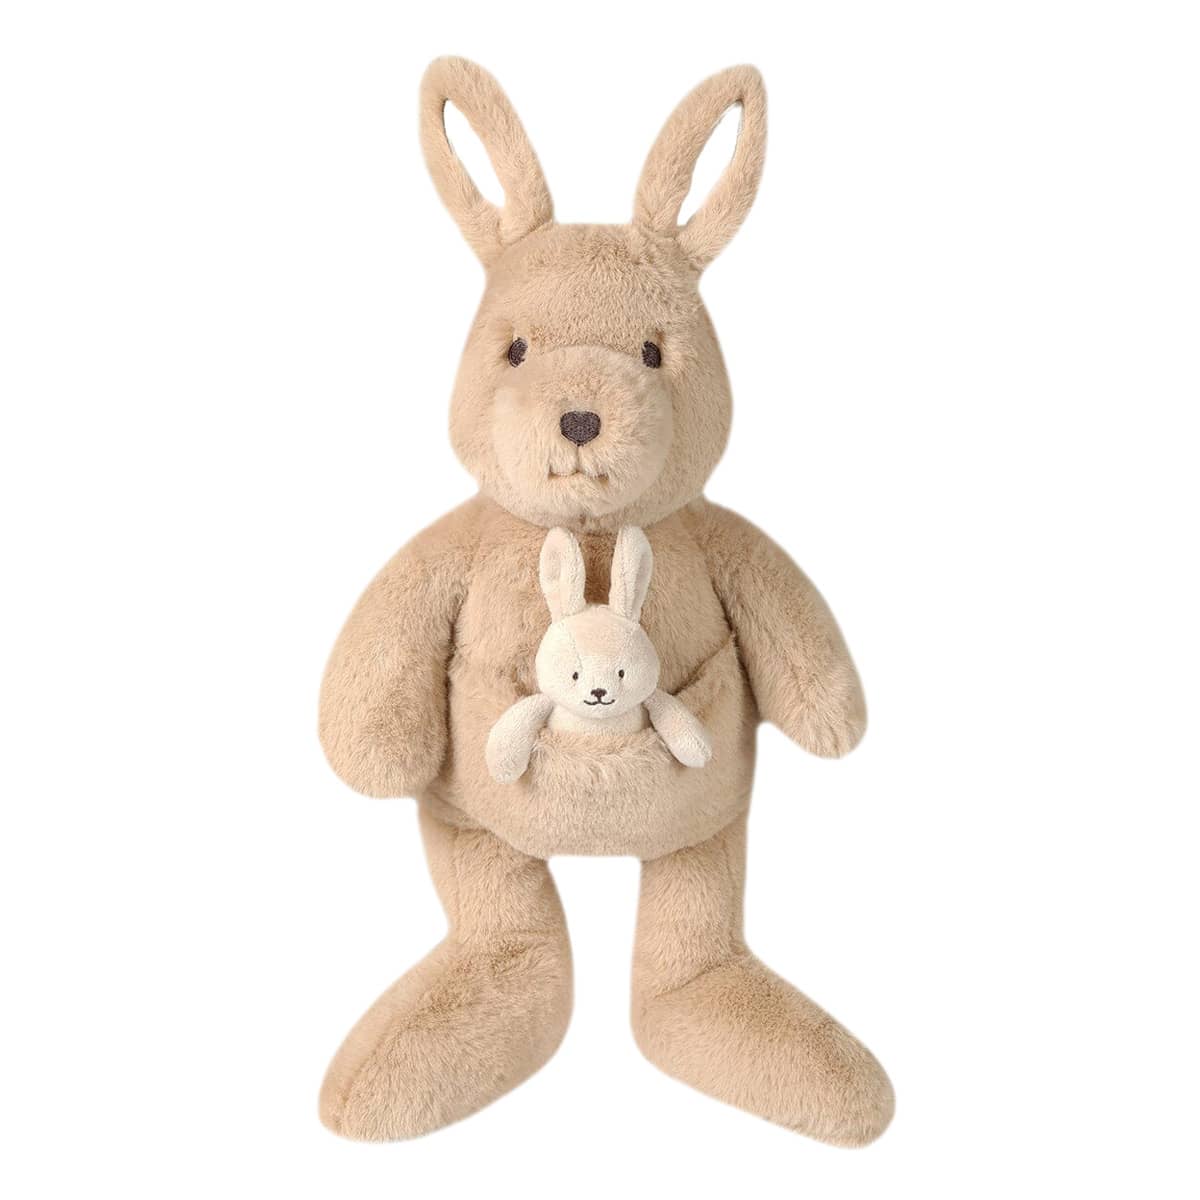 OB Designs Kip Kangaroo Soft Toy